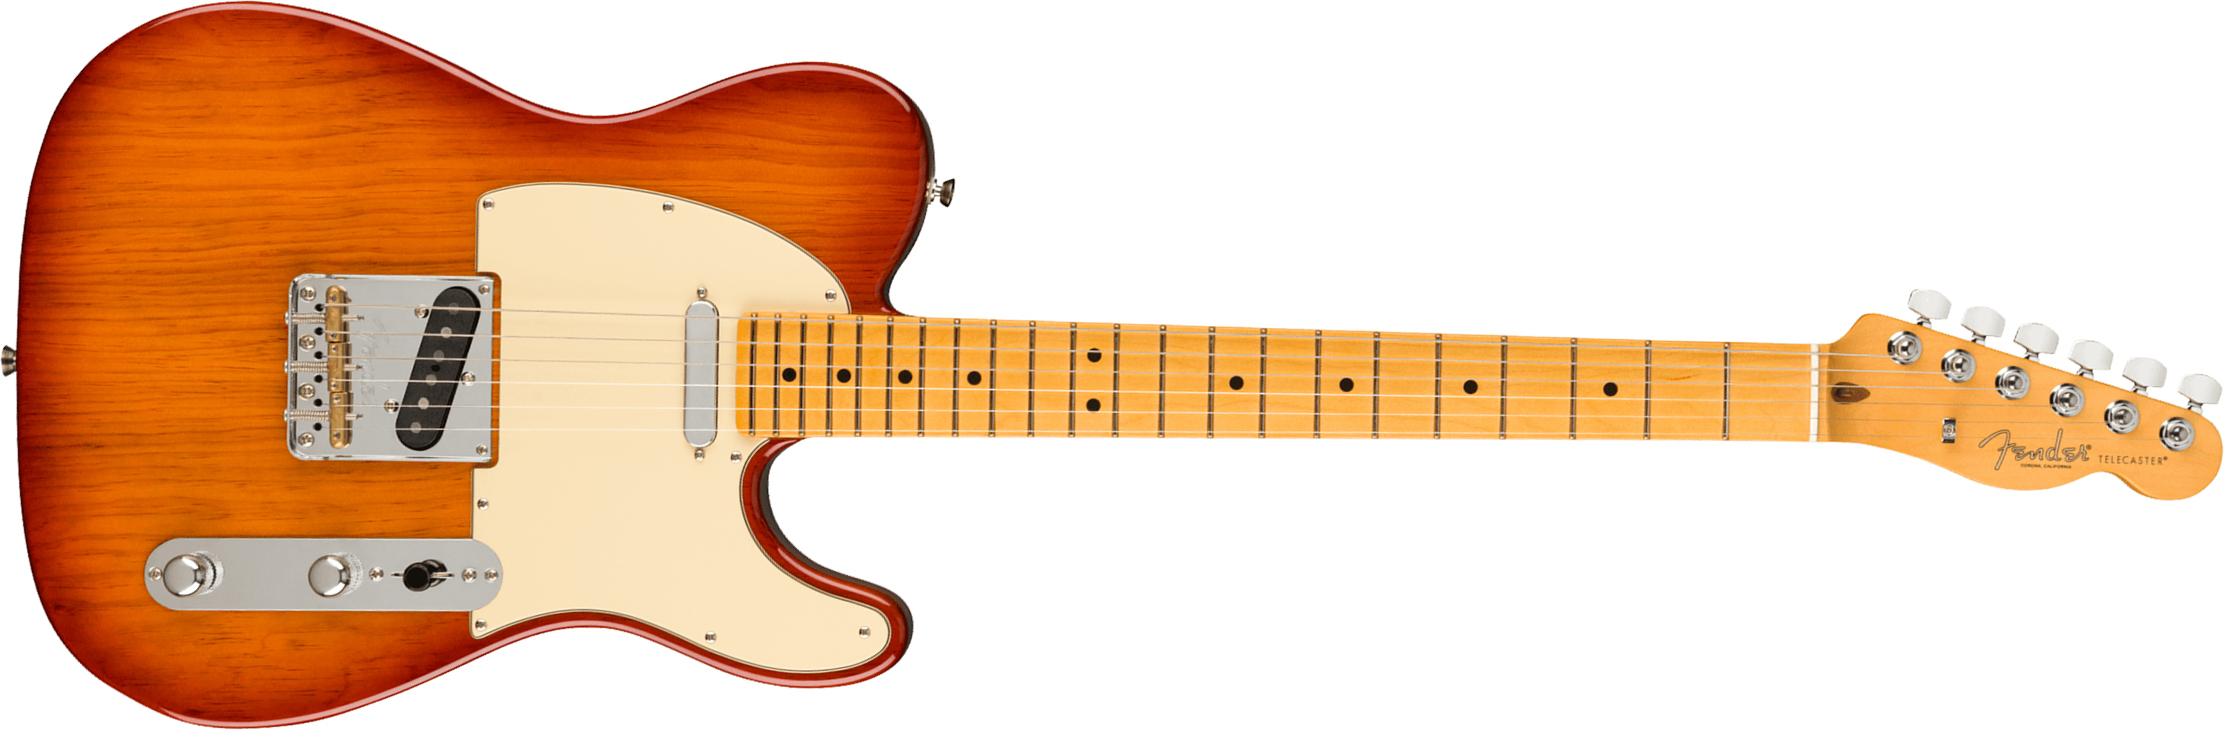 Fender Tele American Professional Ii Usa Mn - Sienna Sunburst - E-Gitarre in Teleform - Main picture